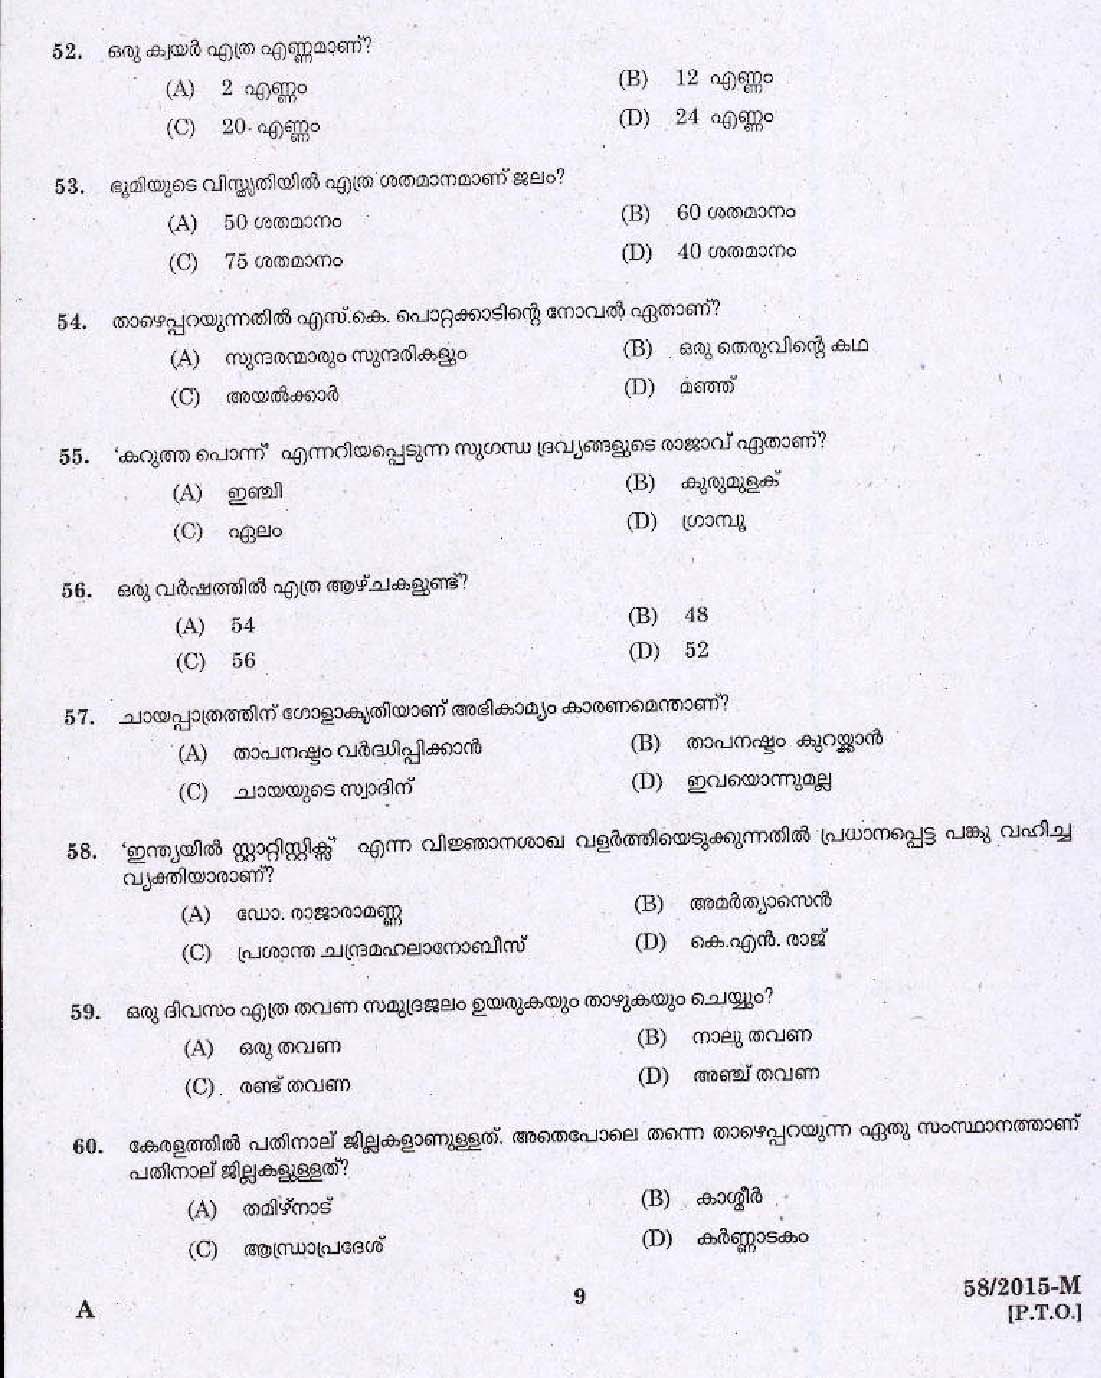 Kerala PSC Attender Exam 2015 Question Paper Code 582015 M 7